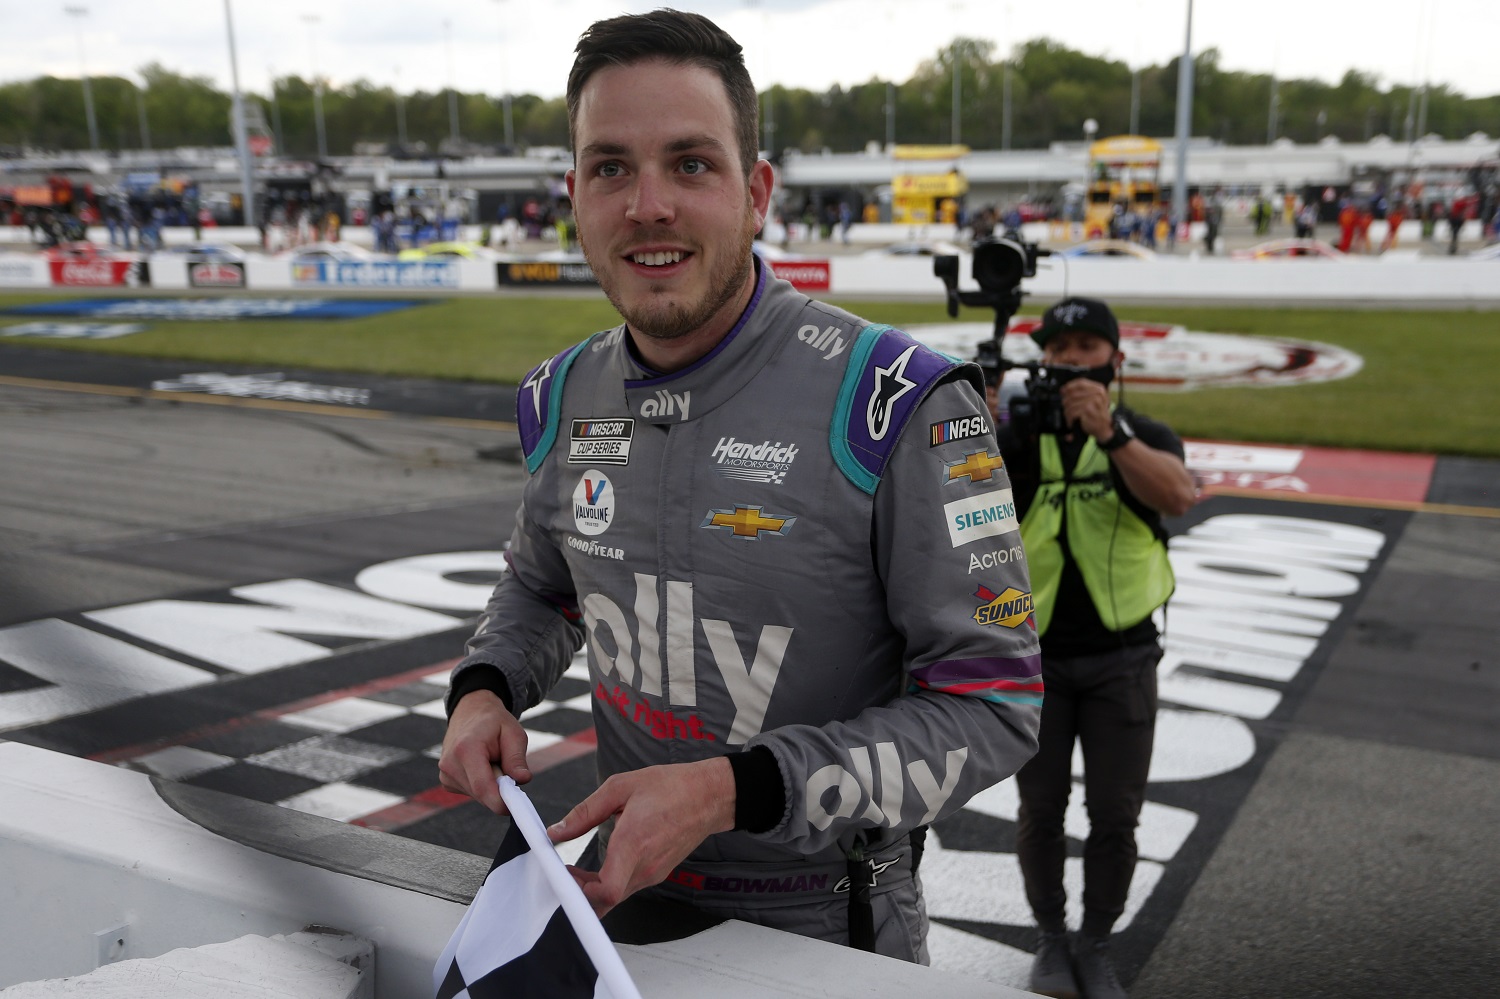 Alex Bowman won the NASCAR Sprint Cup Series race at Richmond Raceway on April 18, 2021.